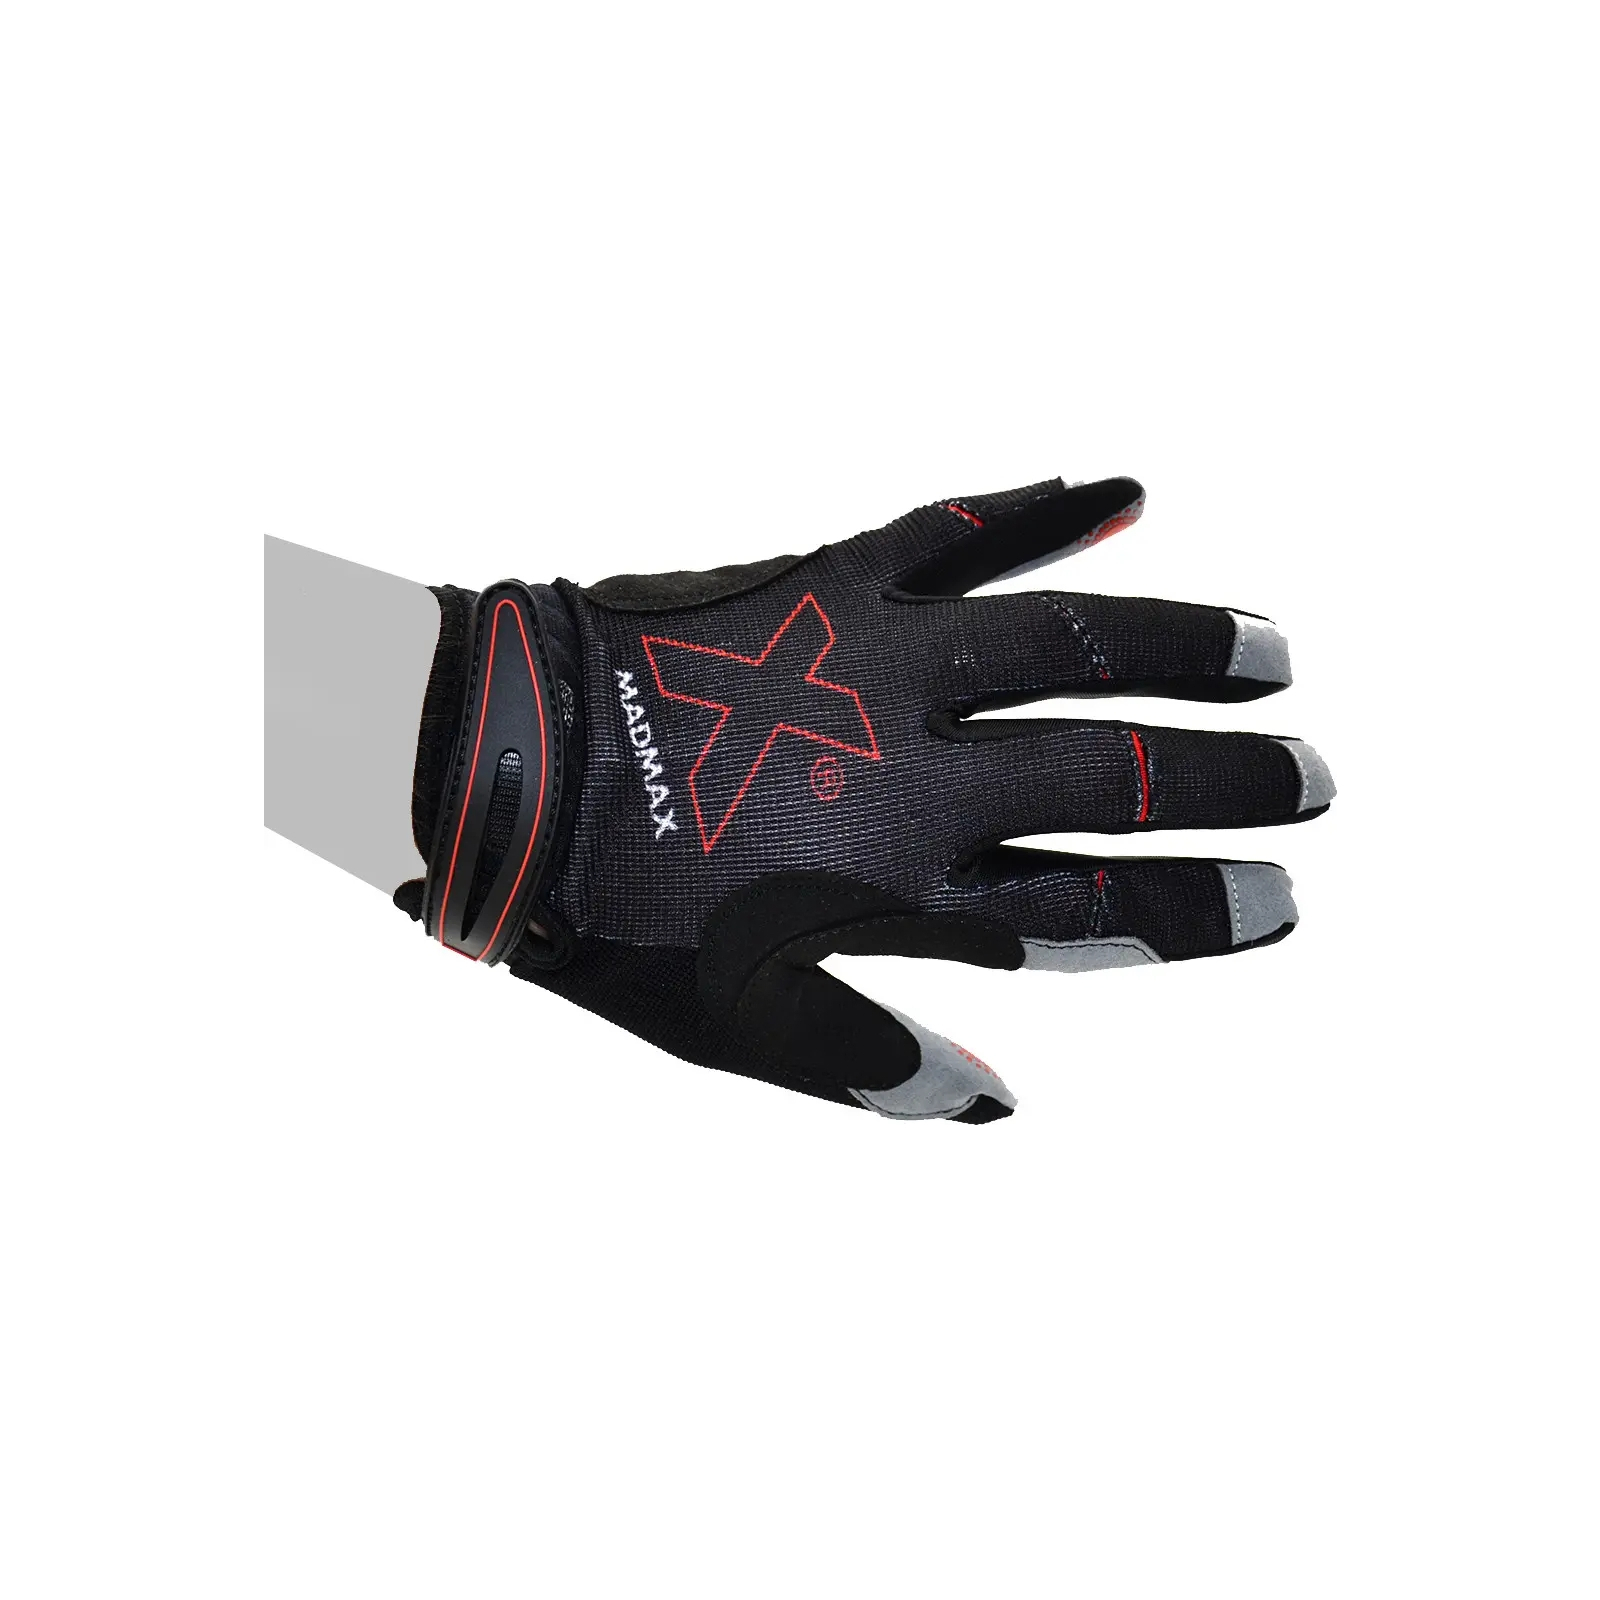 Перчатки для фитнеса MadMax MXG-103 X Gloves Black/Grey L (MXG-103-BLK_L) изображение 8